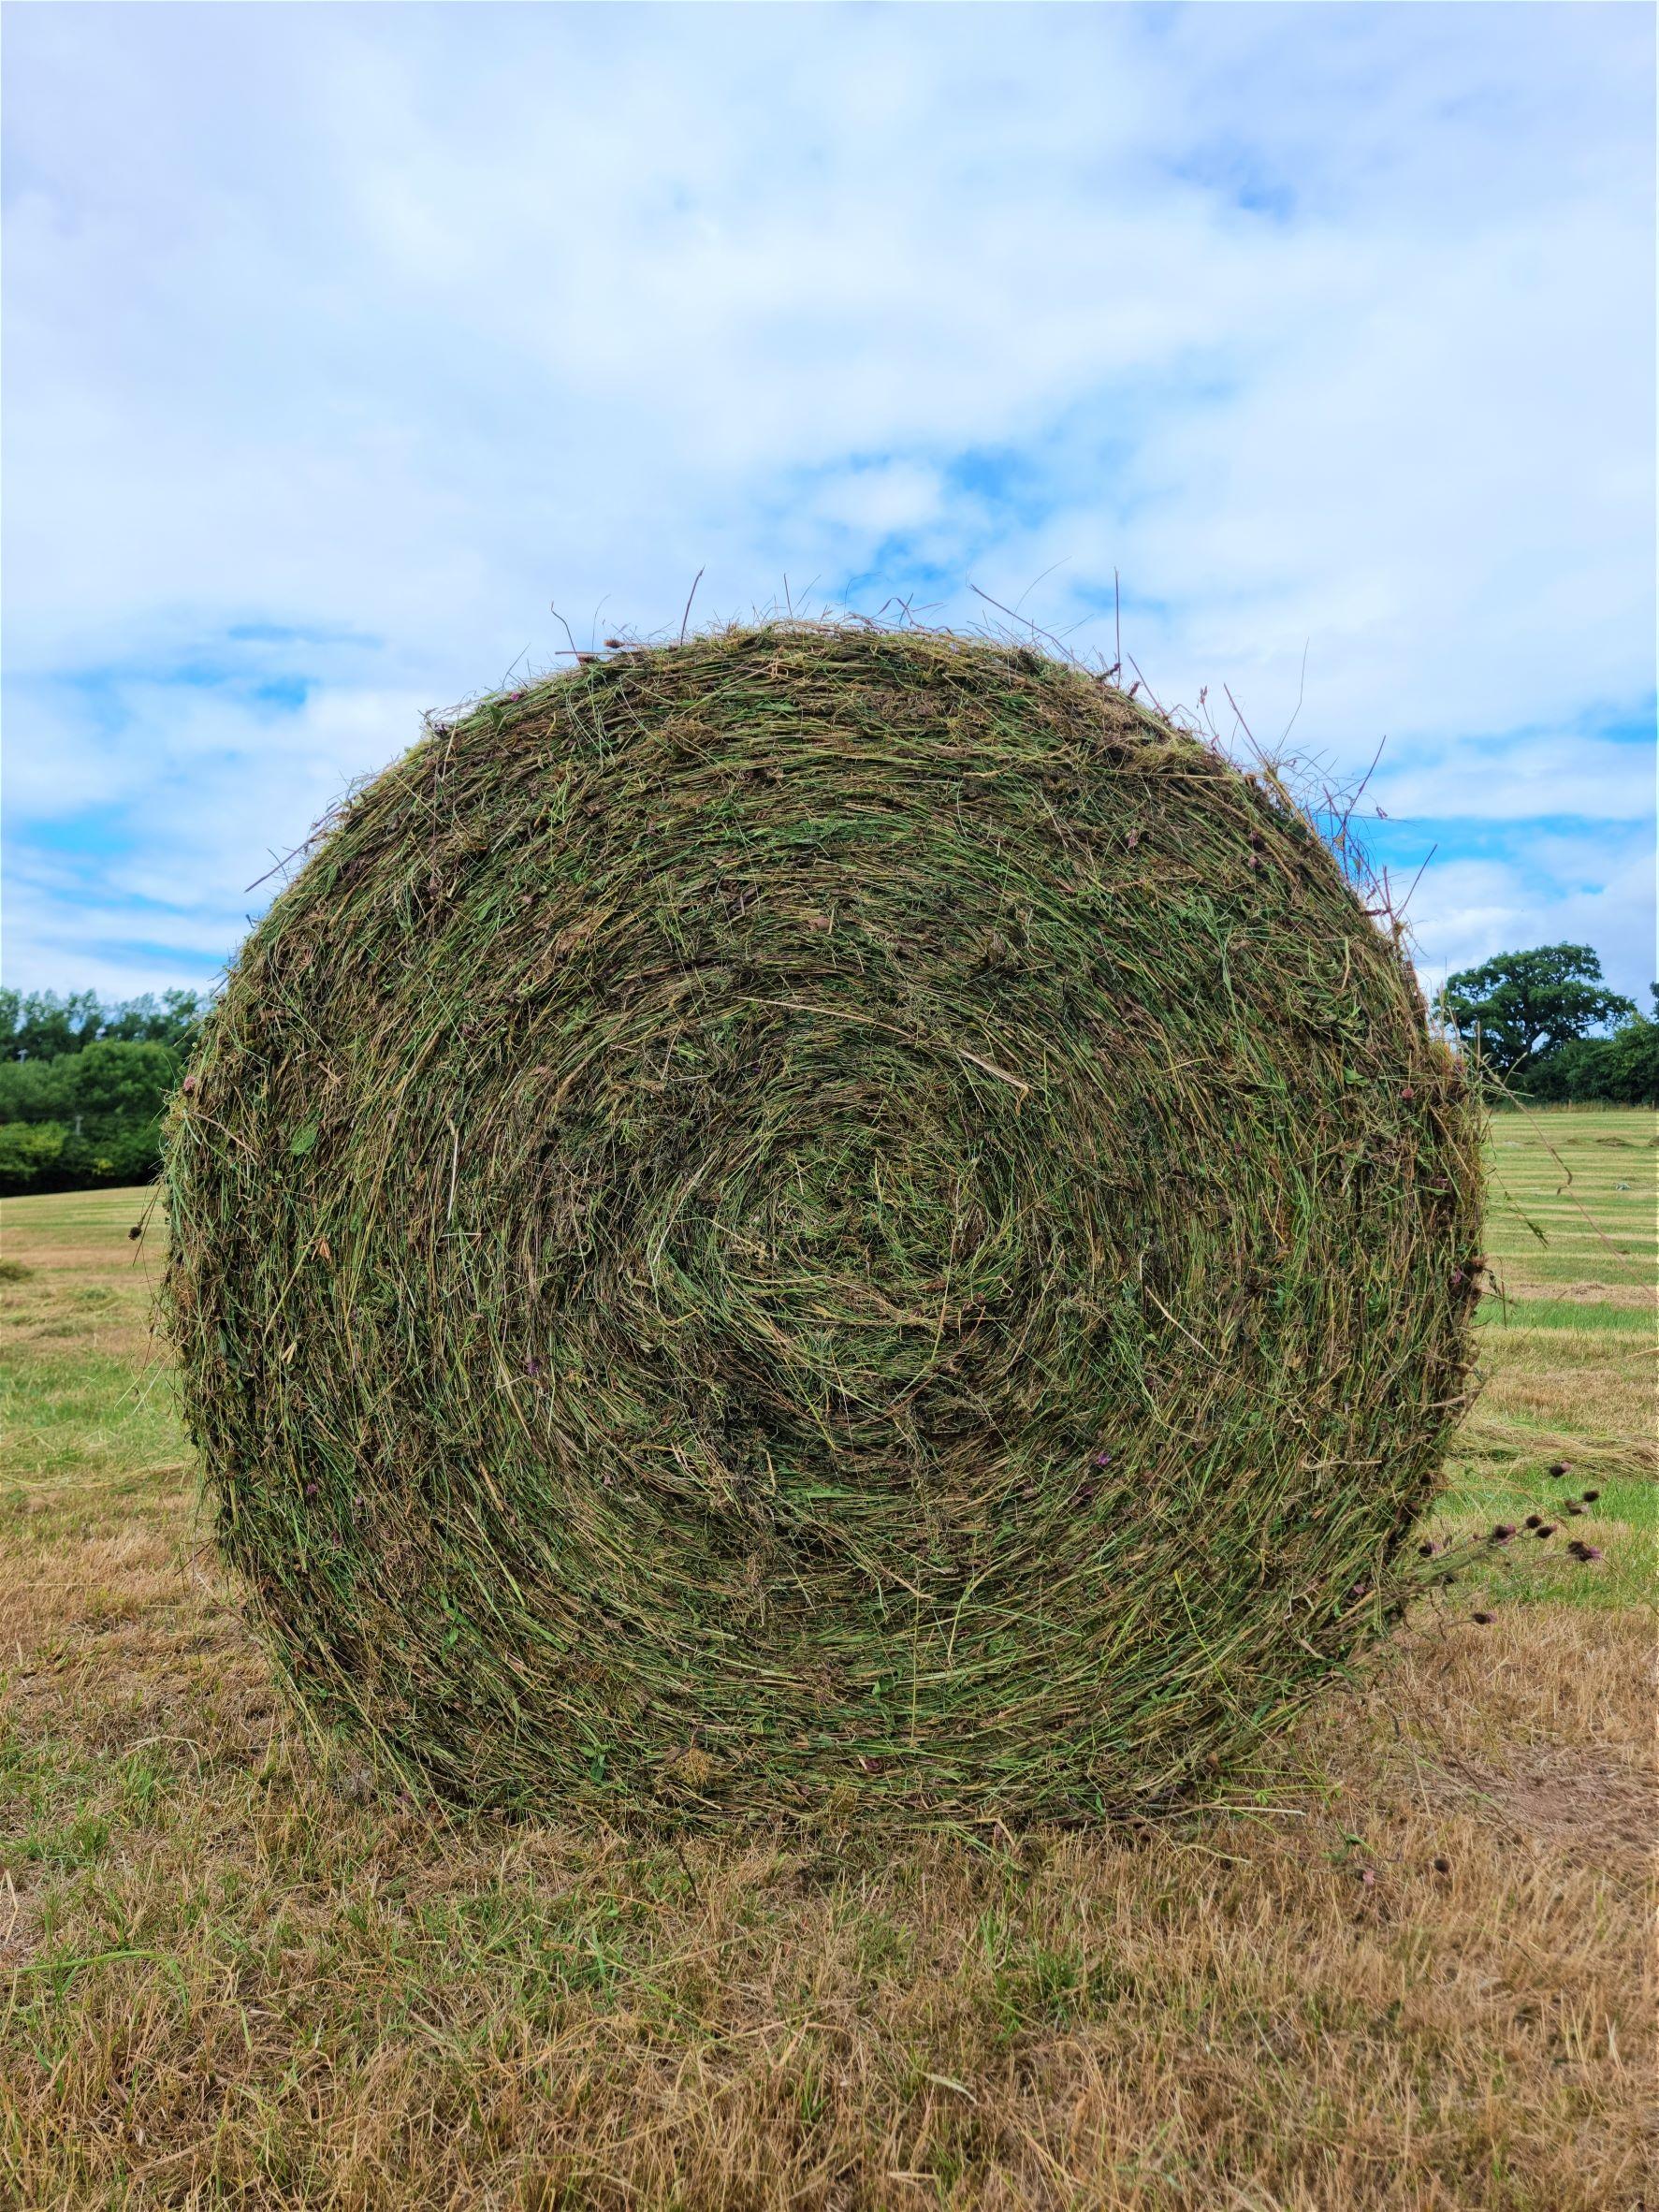 Green Hay in a barrel